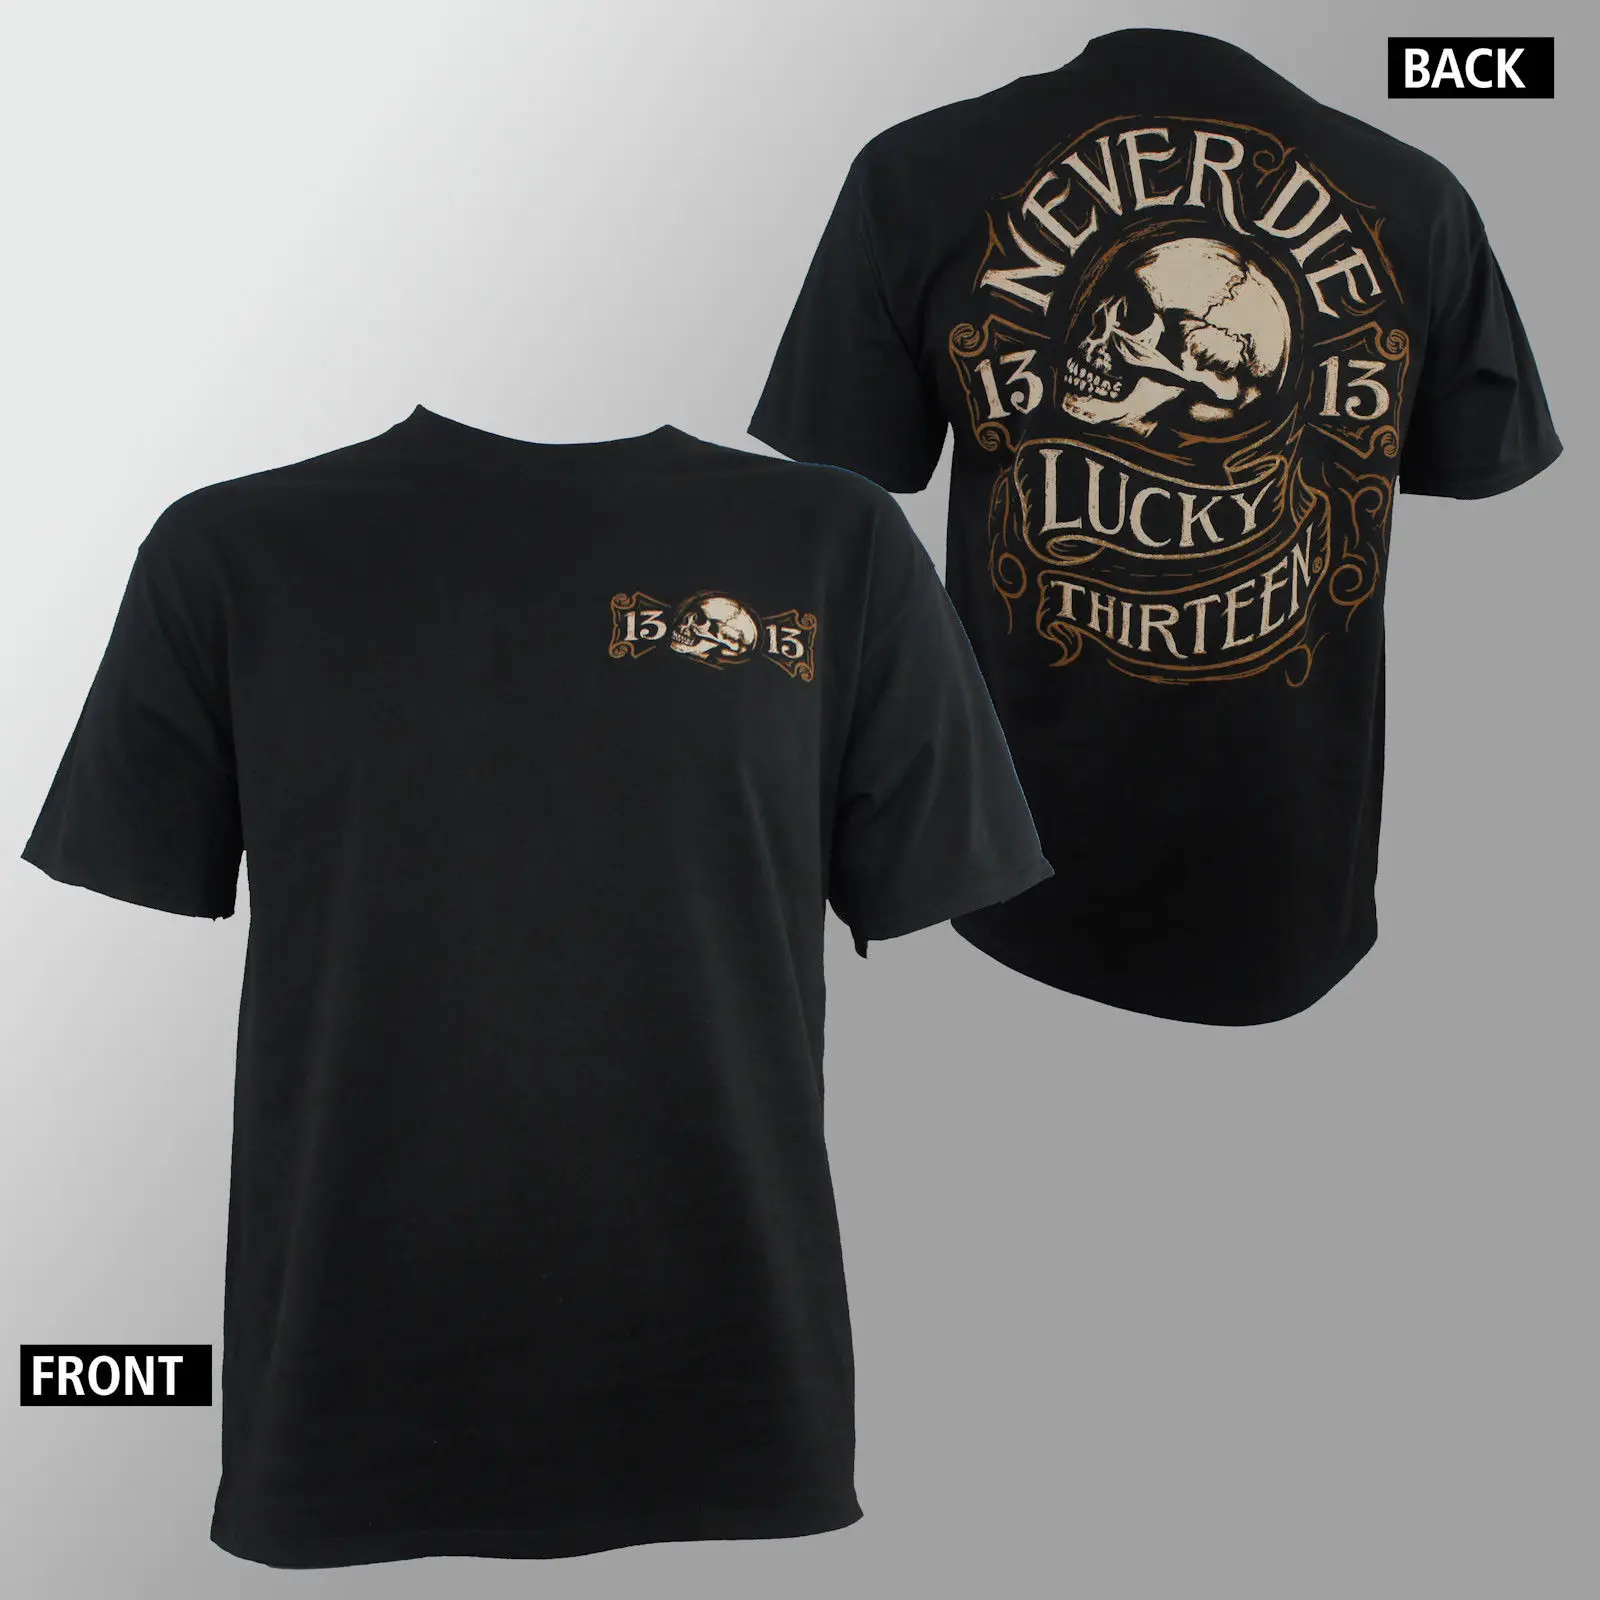 Аутентичная футболка Lucky 13 Never Die Jumbo с логотипом черепа M, L, Xl, 2Xl, 3Xl, новая футболка с принтом, Мужская брендовая одежда размера плюс 033056